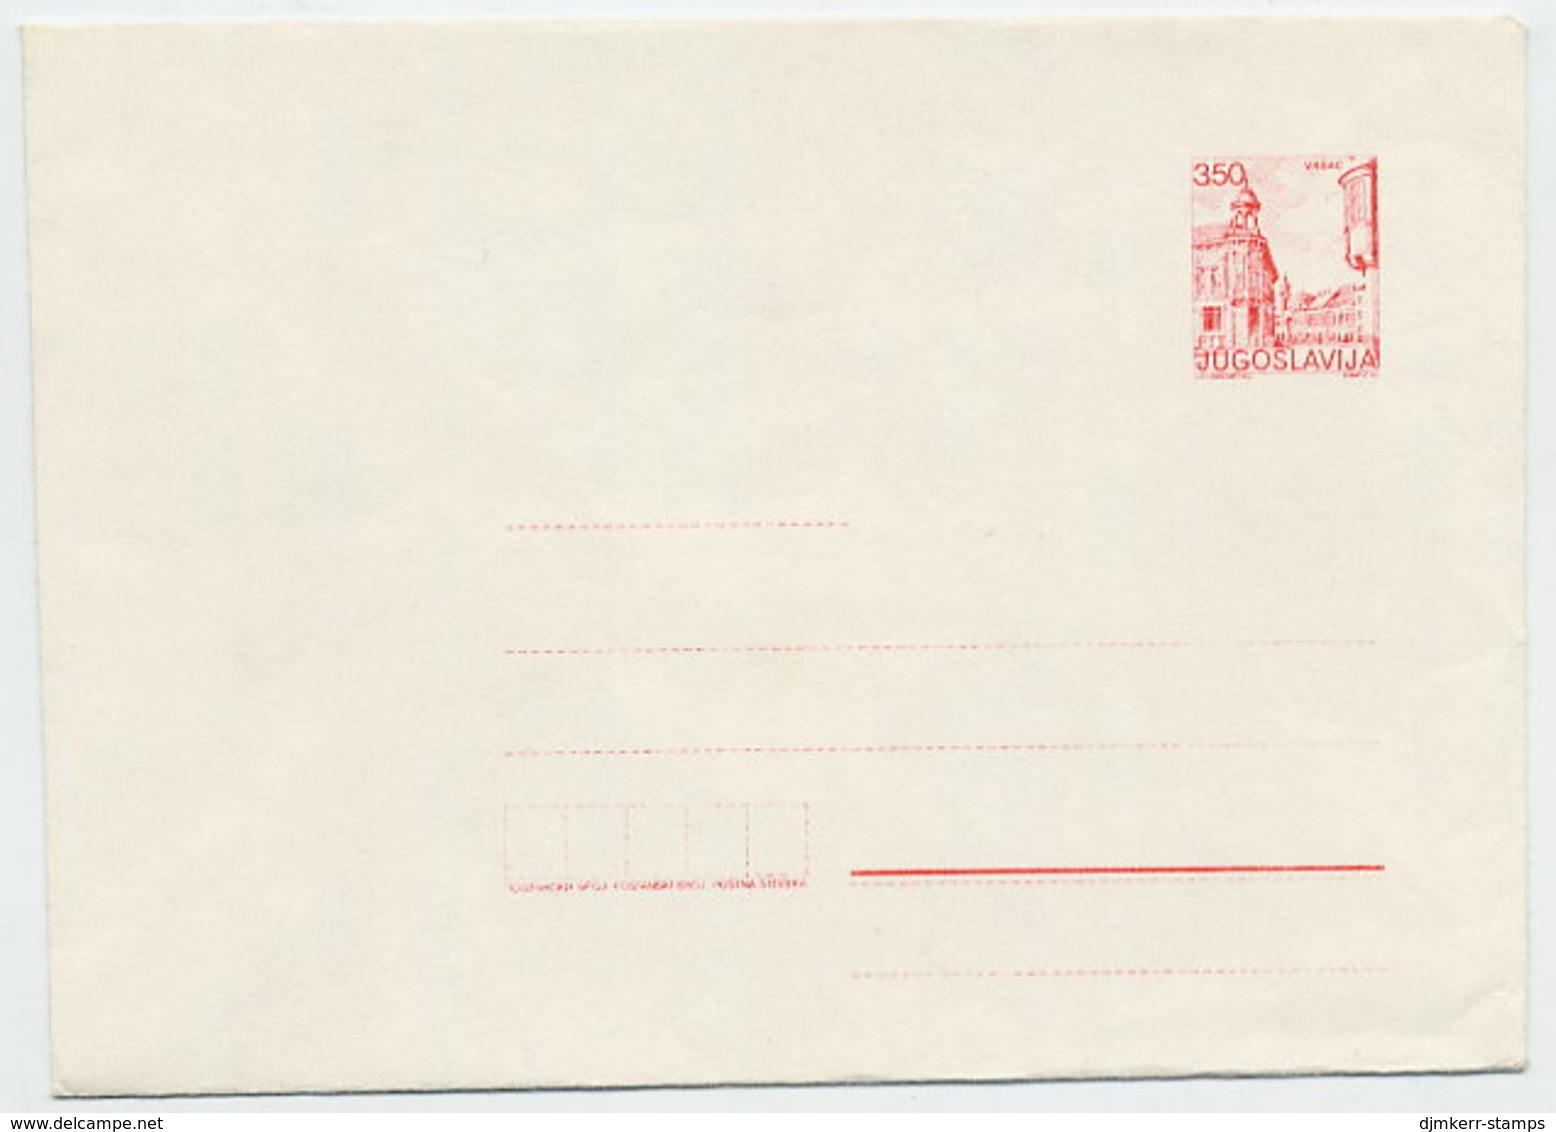 YUGOSLAVIA 1981 Tourism 3.50 D. Envelope, Unused. Michel U63 - Ganzsachen